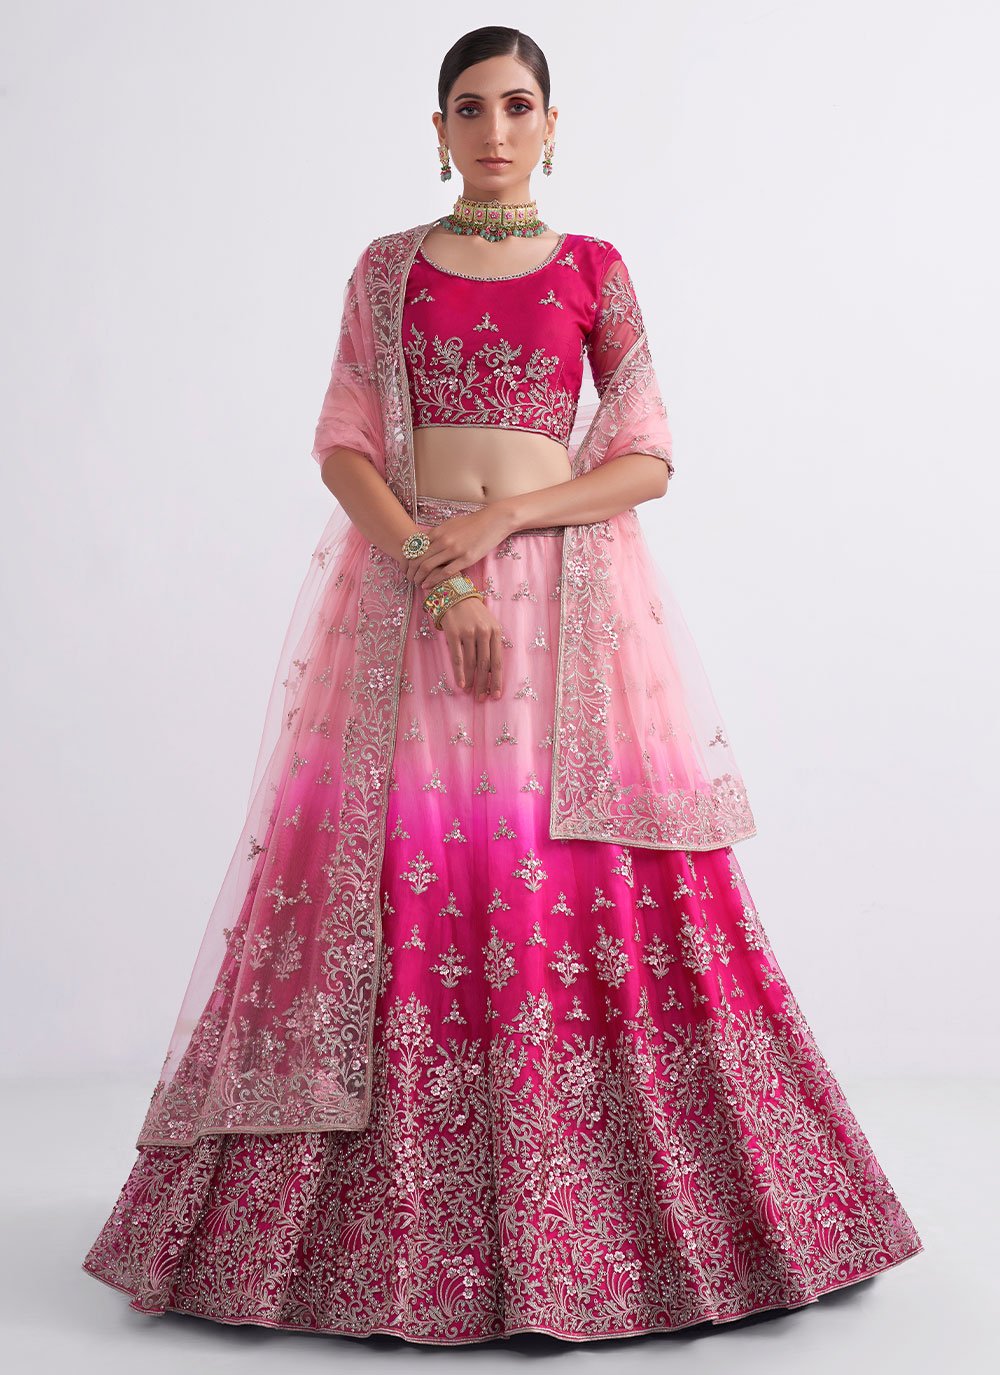 Pink Net Embroidered Trendy Lehenga Choli for Wedding